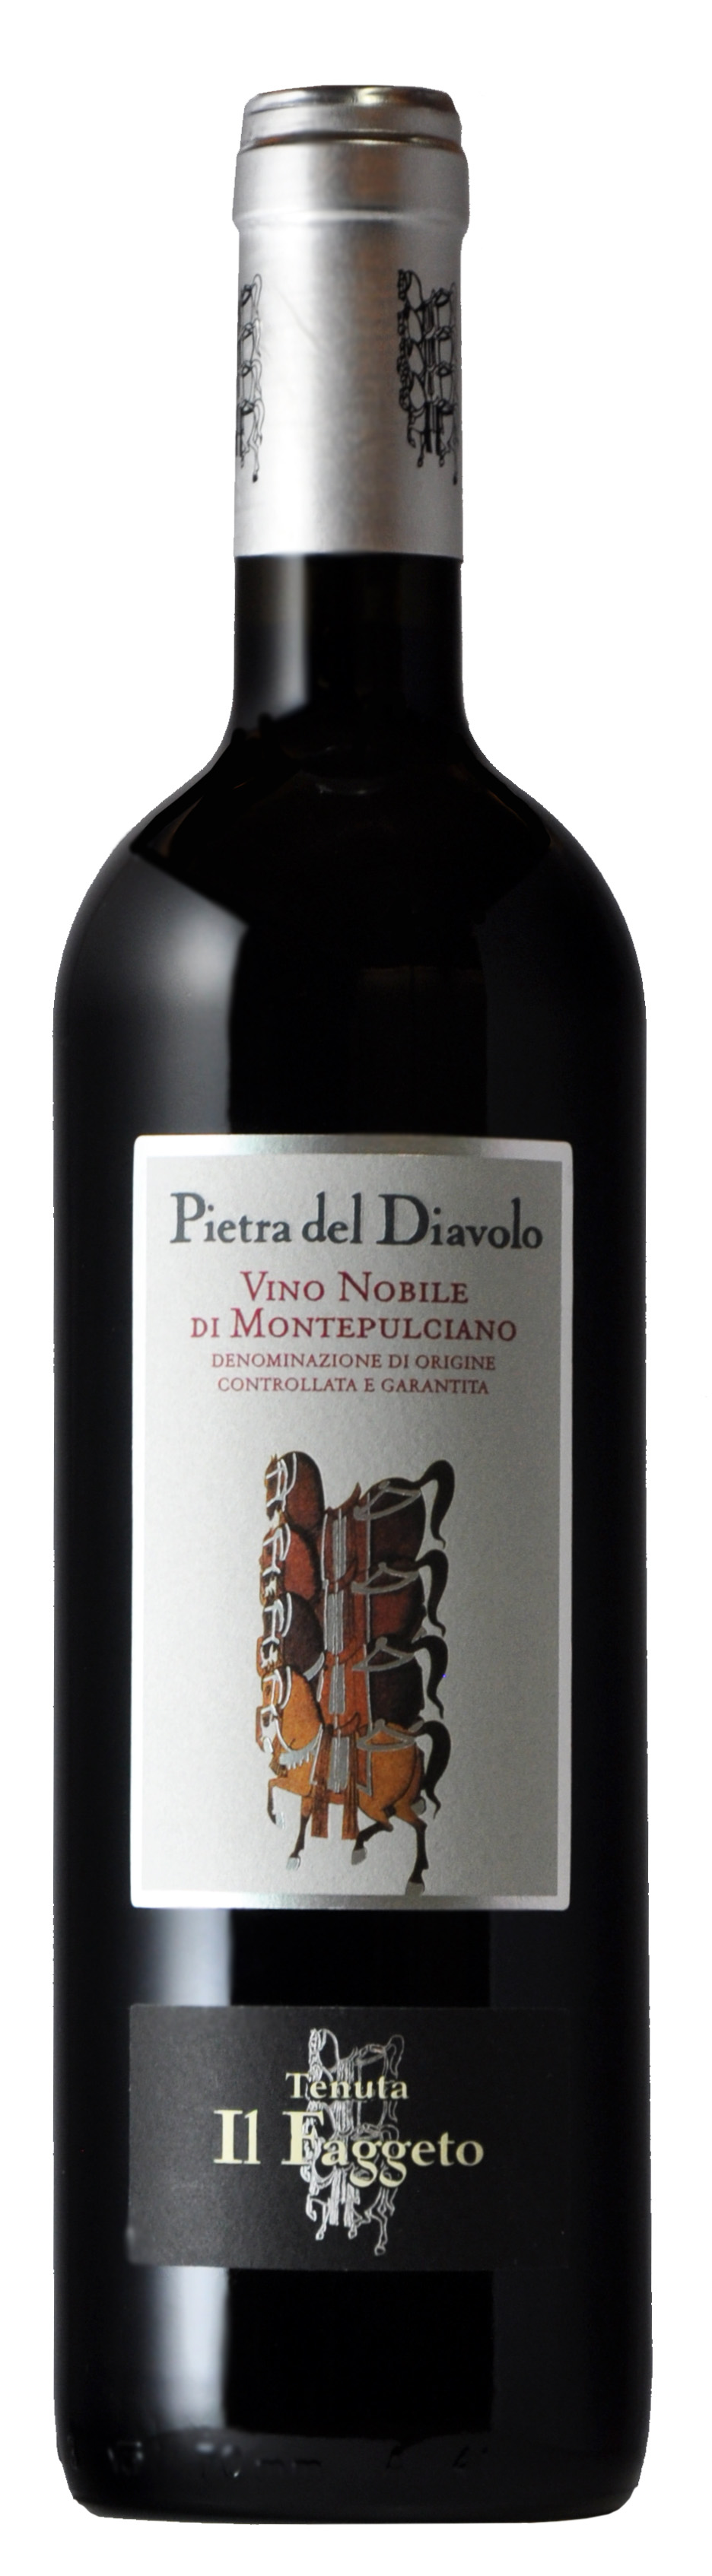 Vino Nobile di Montepulciano "Pietra del Diavolo" DOCG 2019